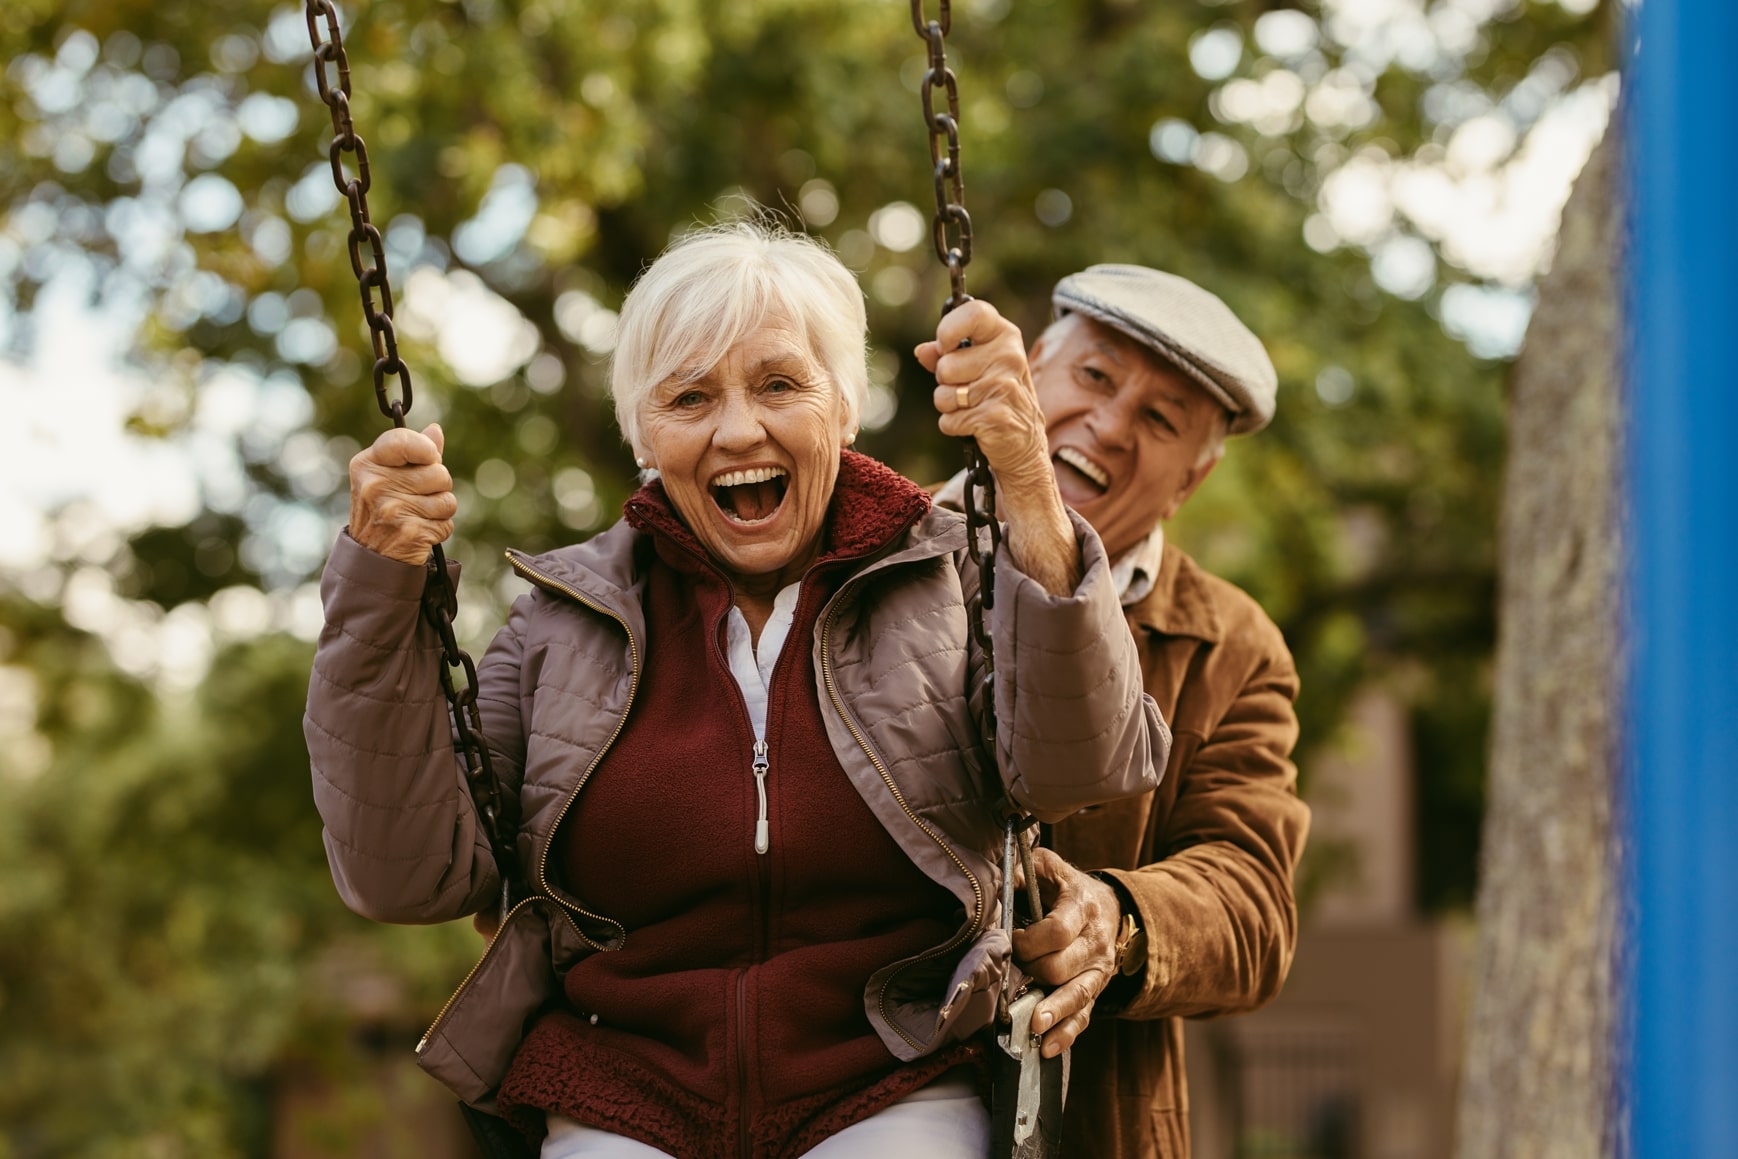 An elderly couple enjoy a swingset together.